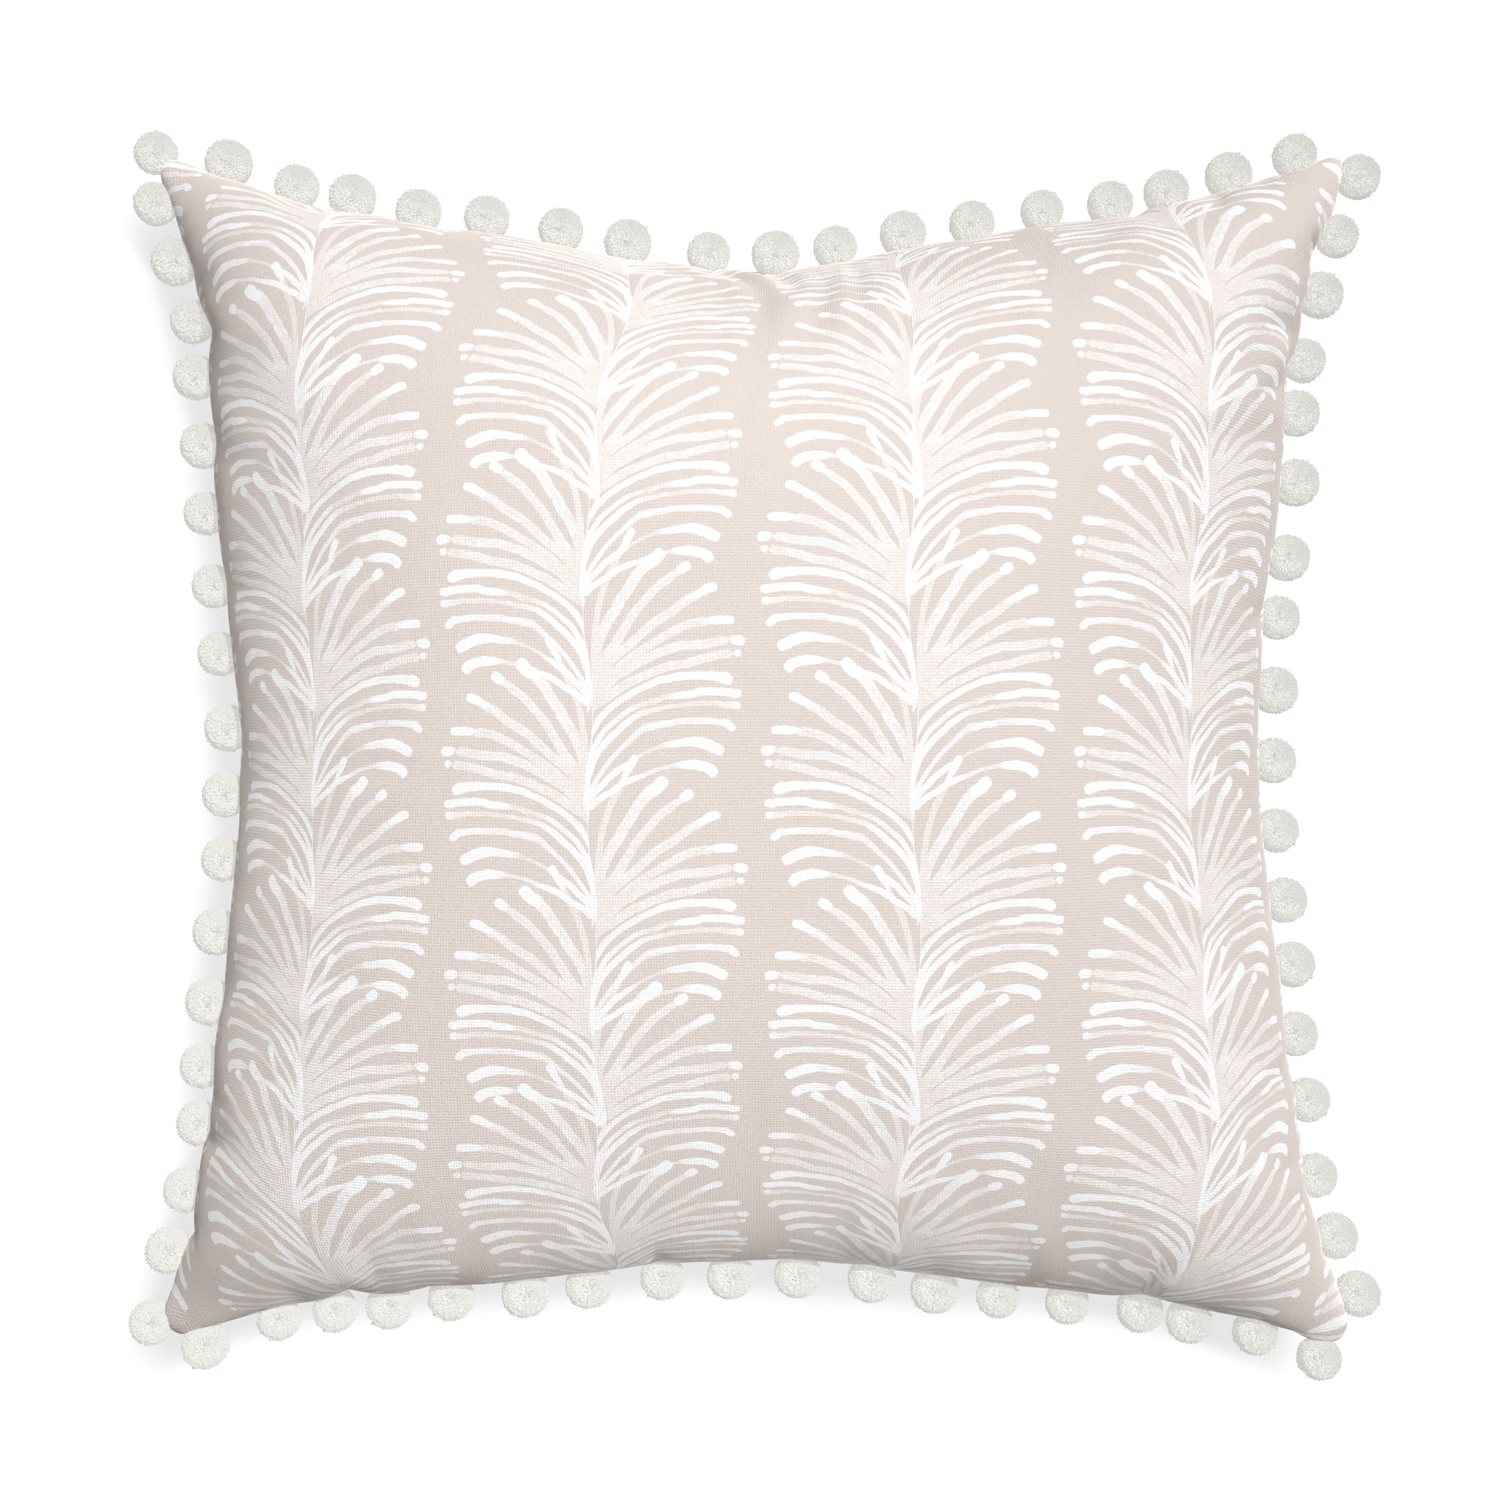 Euro-sham emma sand custom pillow with snow pom pom on white background